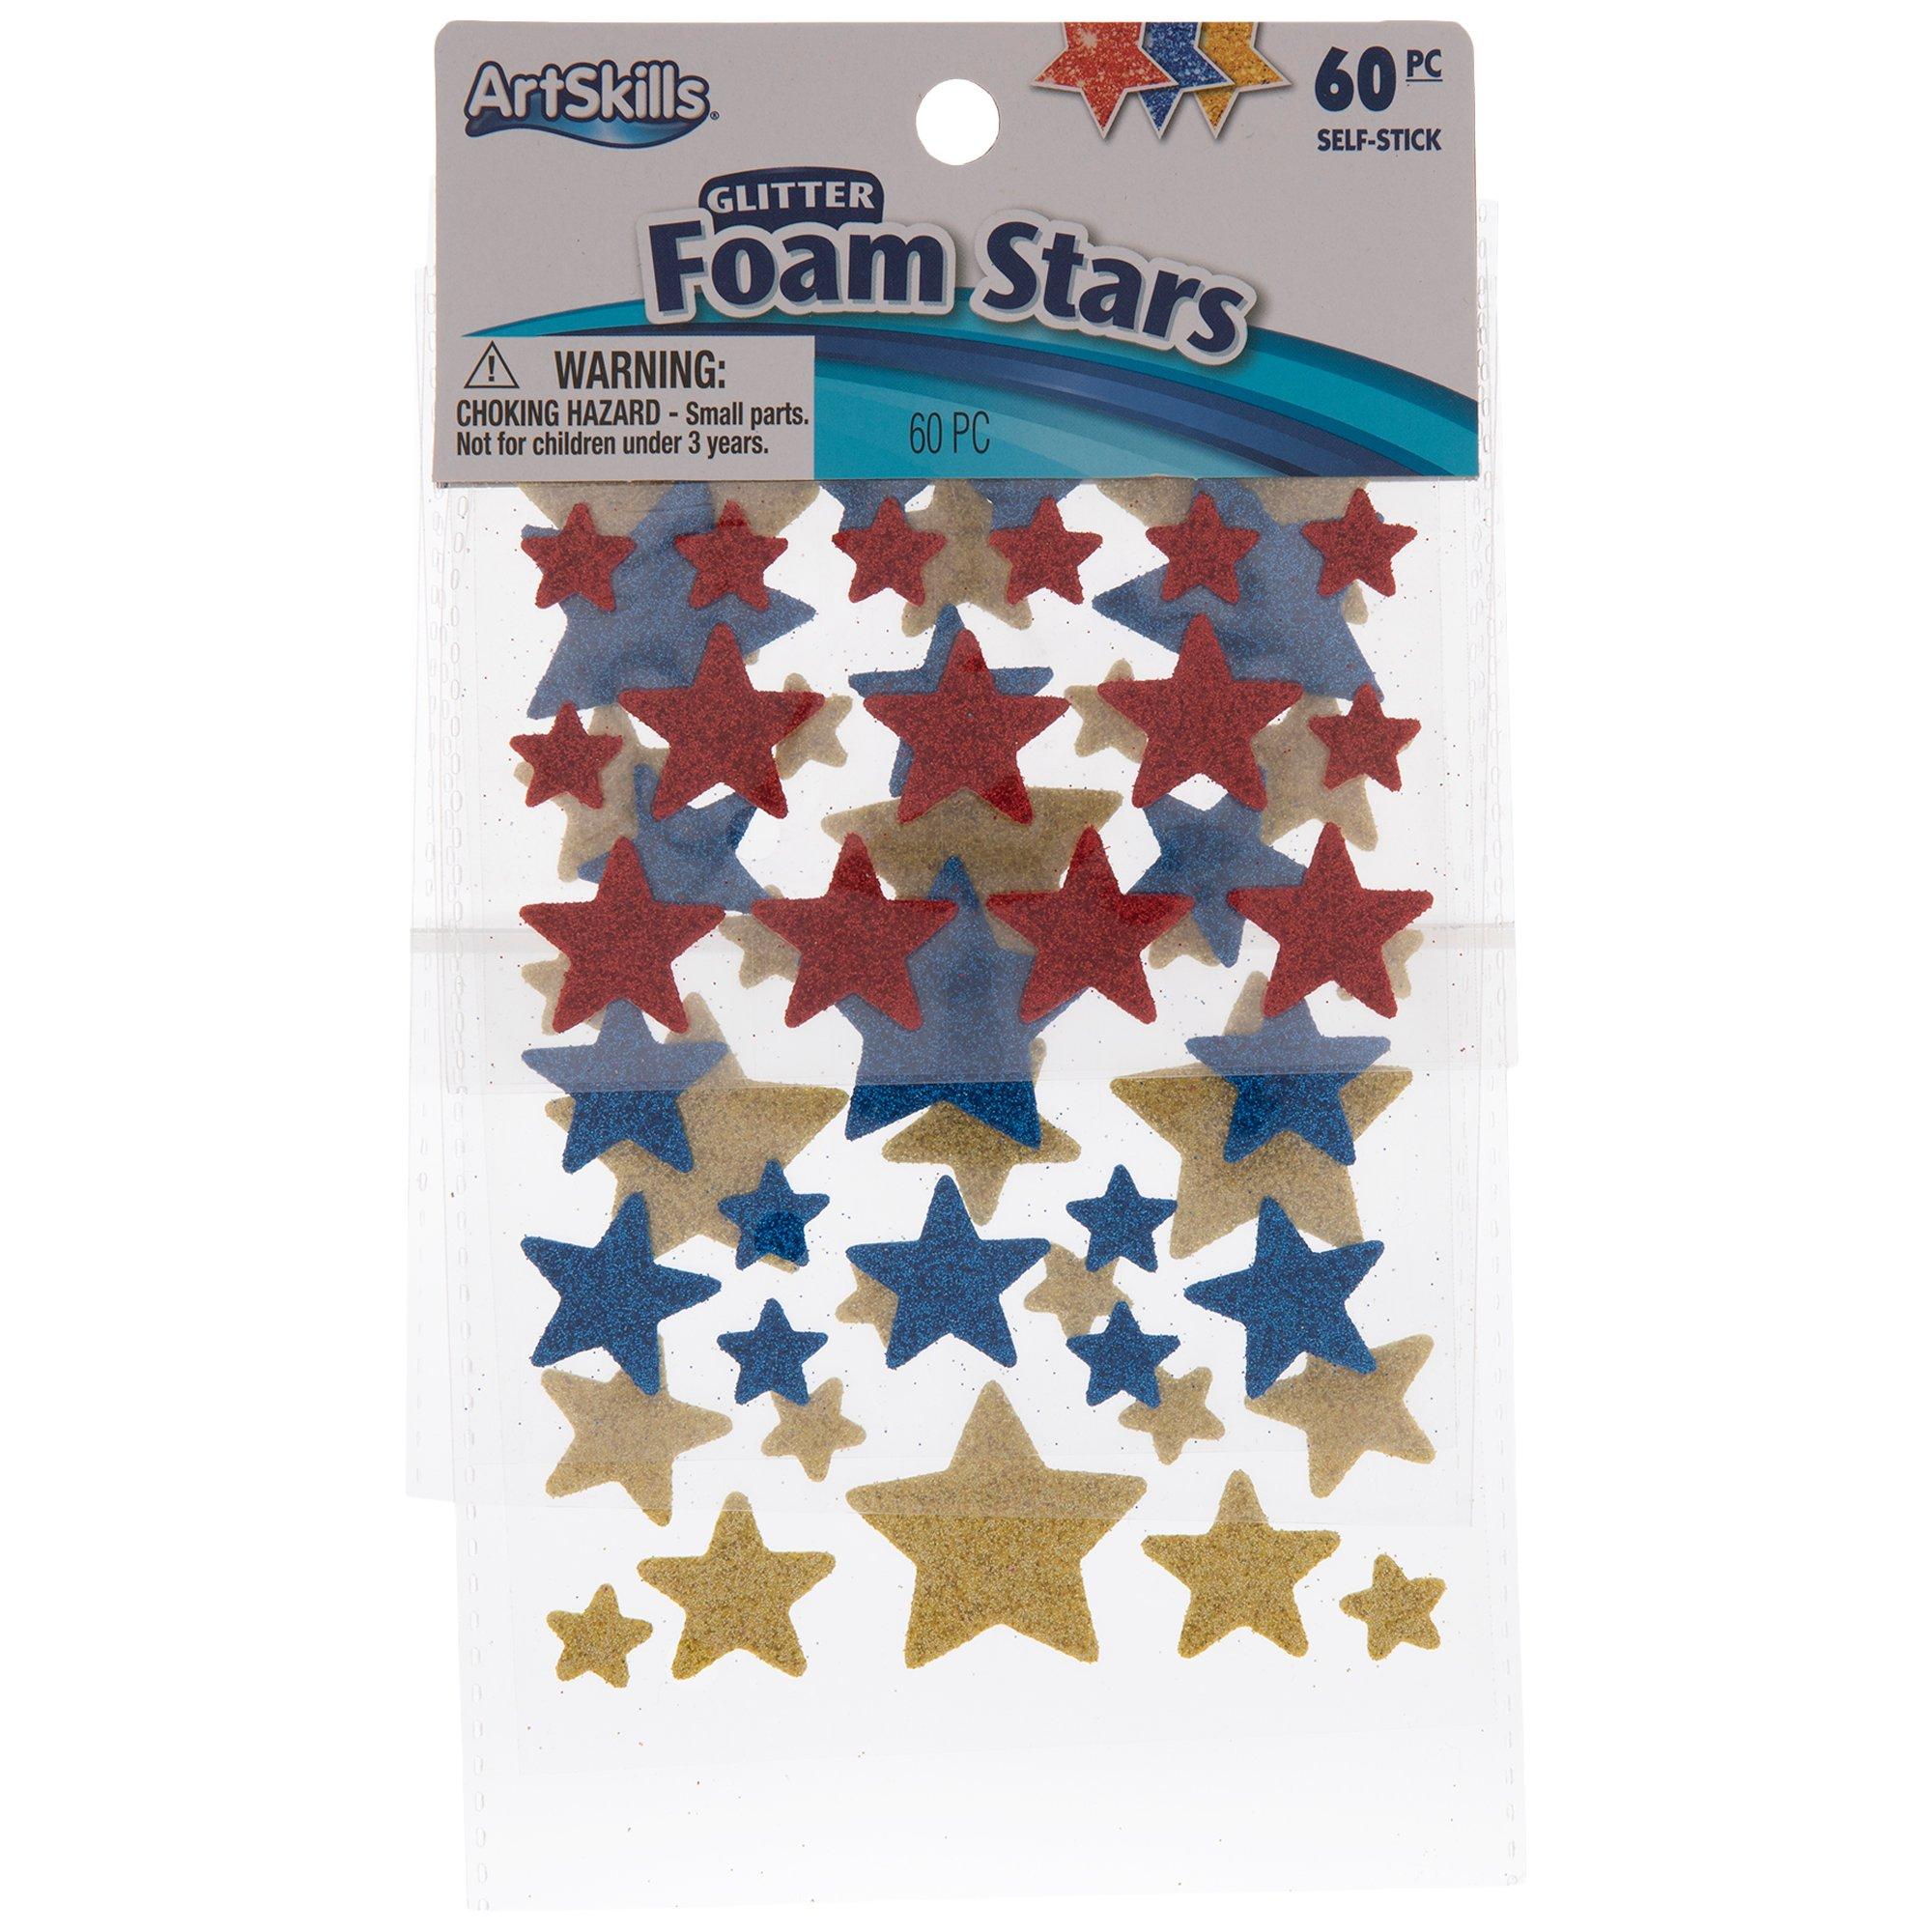 Hello Hobby Multicolor Foam Glitter Star Stickers, 57 Piece 4.5 x